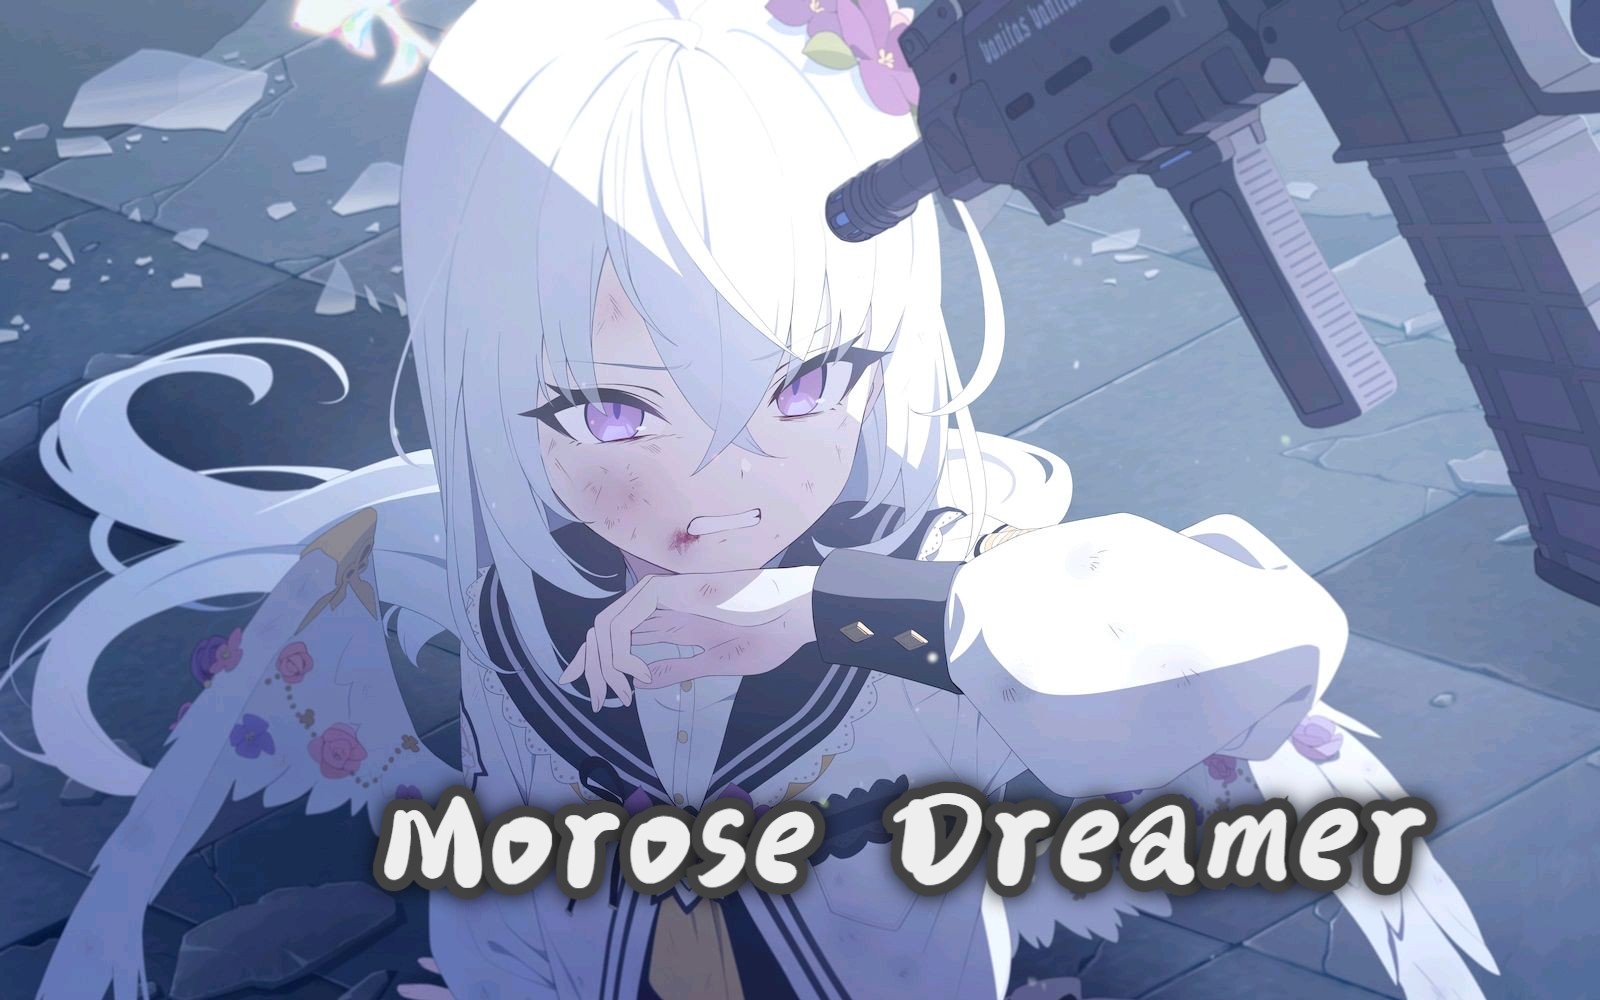 【碧蓝档案-Morose Dreamer-助眠音乐-雨声】Blue Archive Morose Dreamer